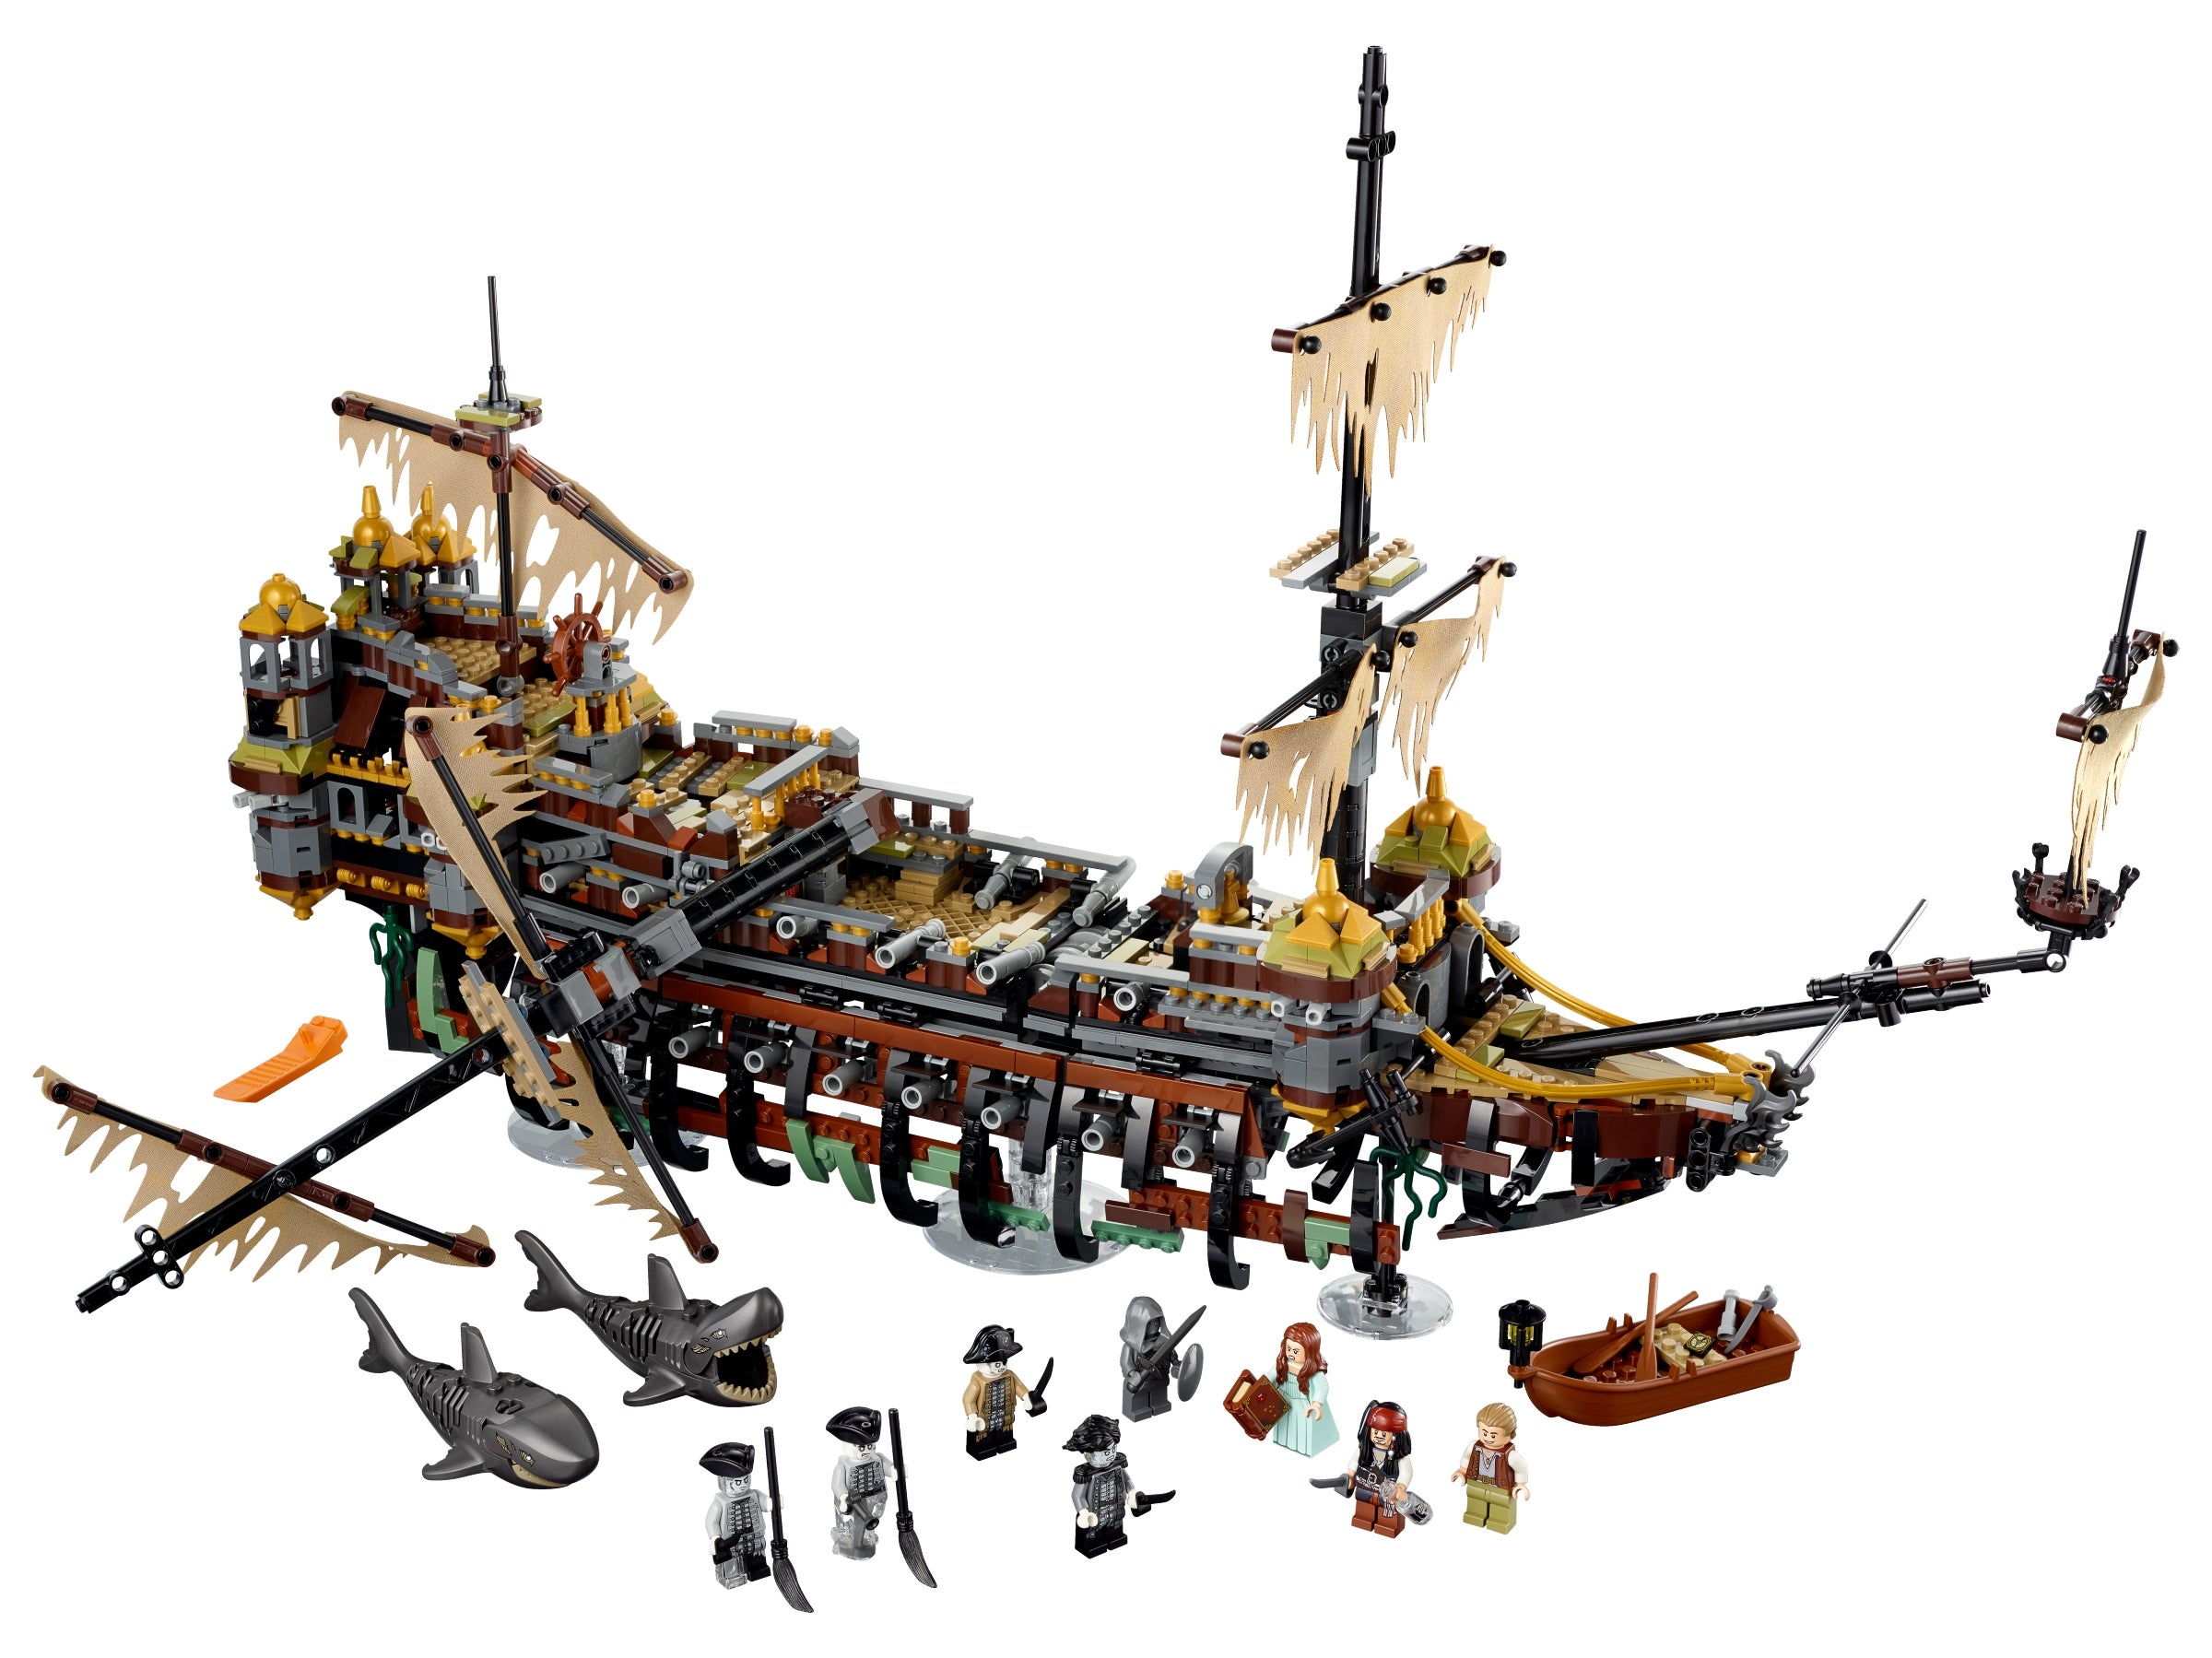 NEW LegoPirates Caribbean Silent Mary 71042 Captain Jack Sparrow Minifig Only